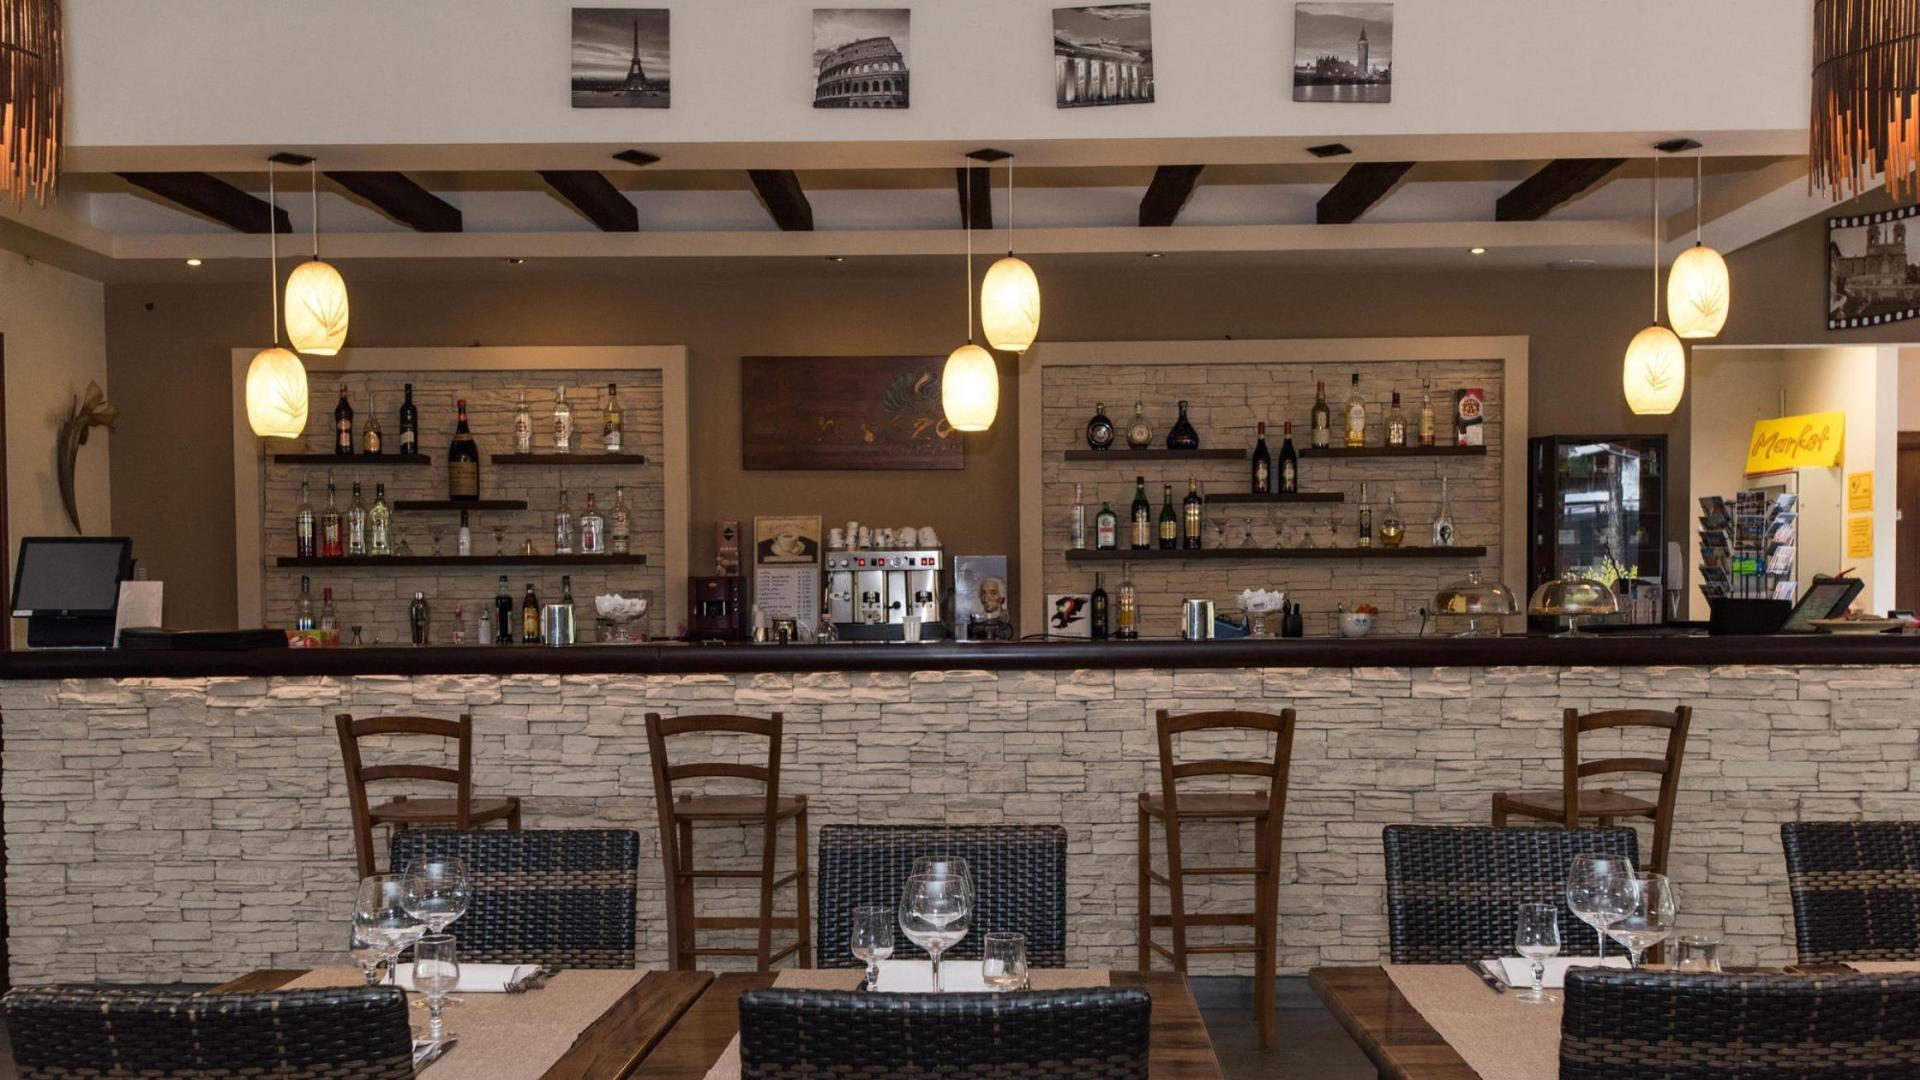 Cozy restaurant bar with wooden decor, shelves of bottles, and elegant table settings.